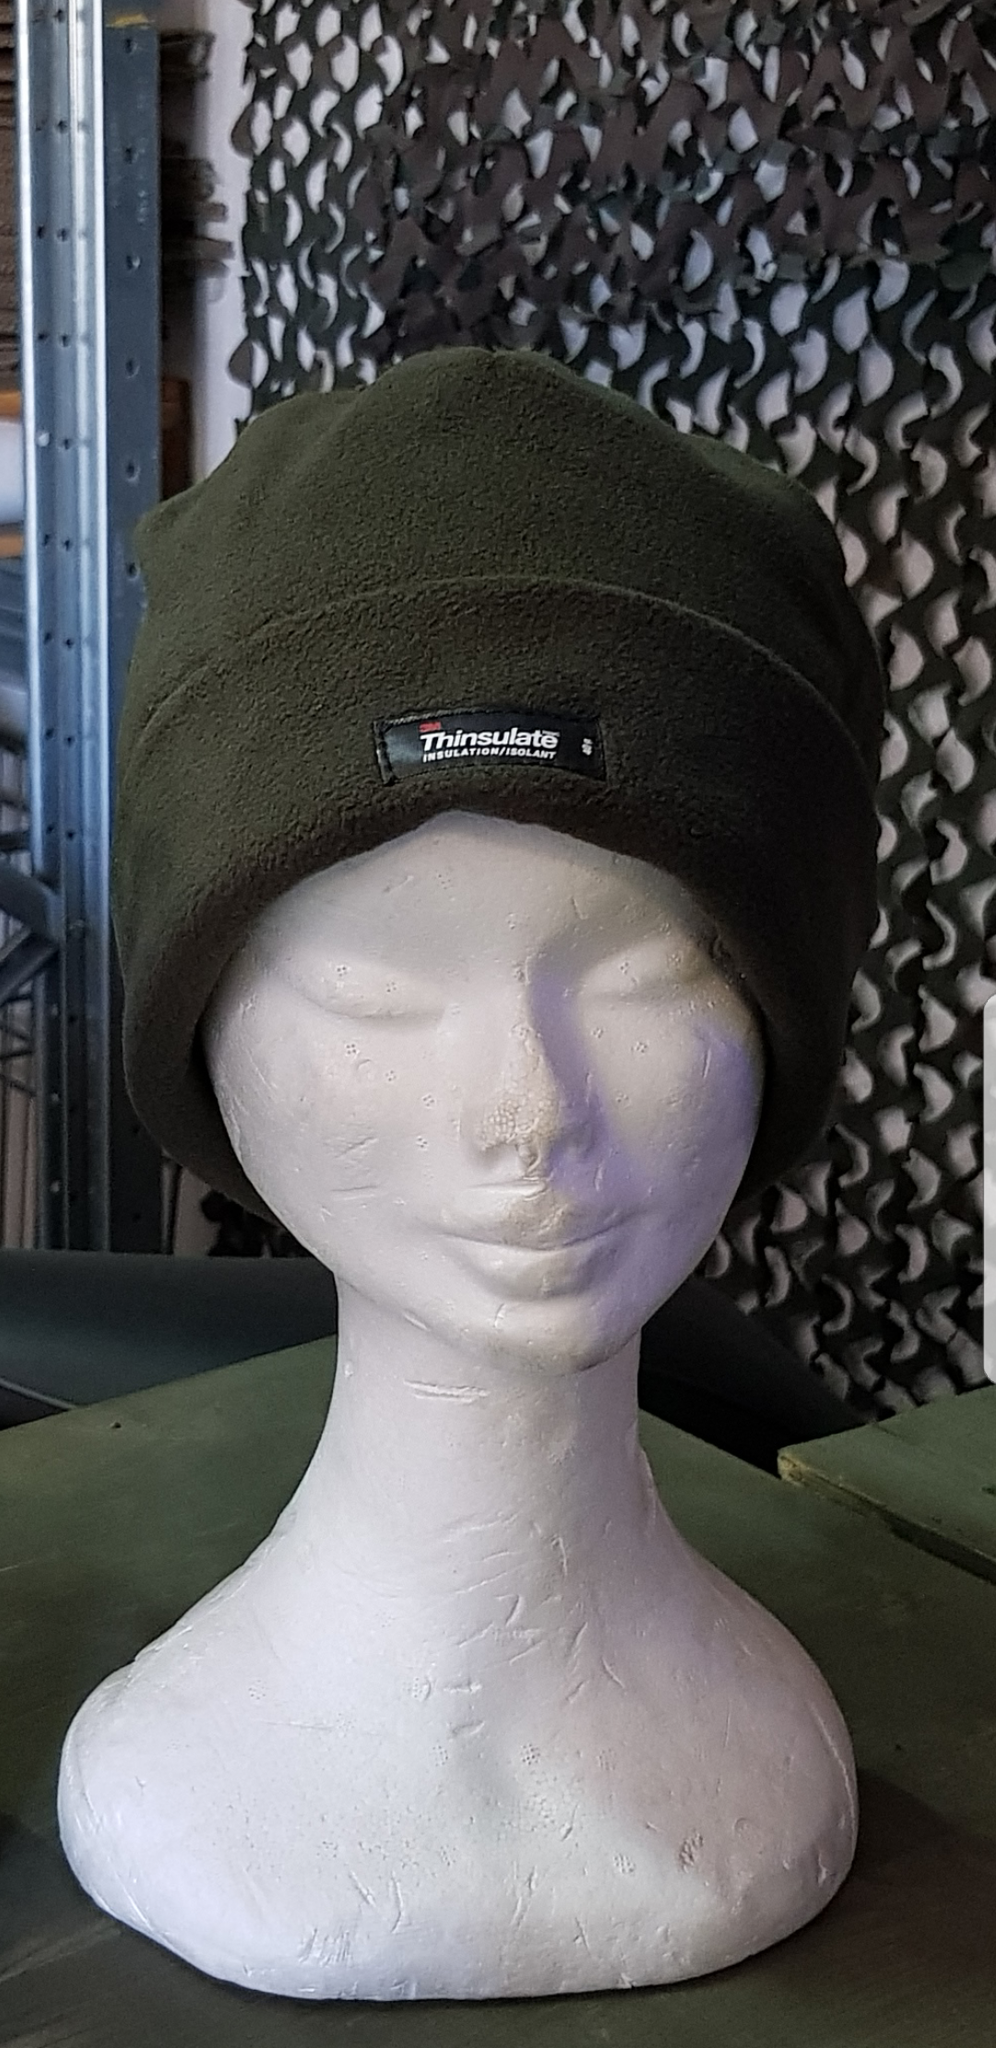 Cappello Thinsulate in Pile U10853 Nero